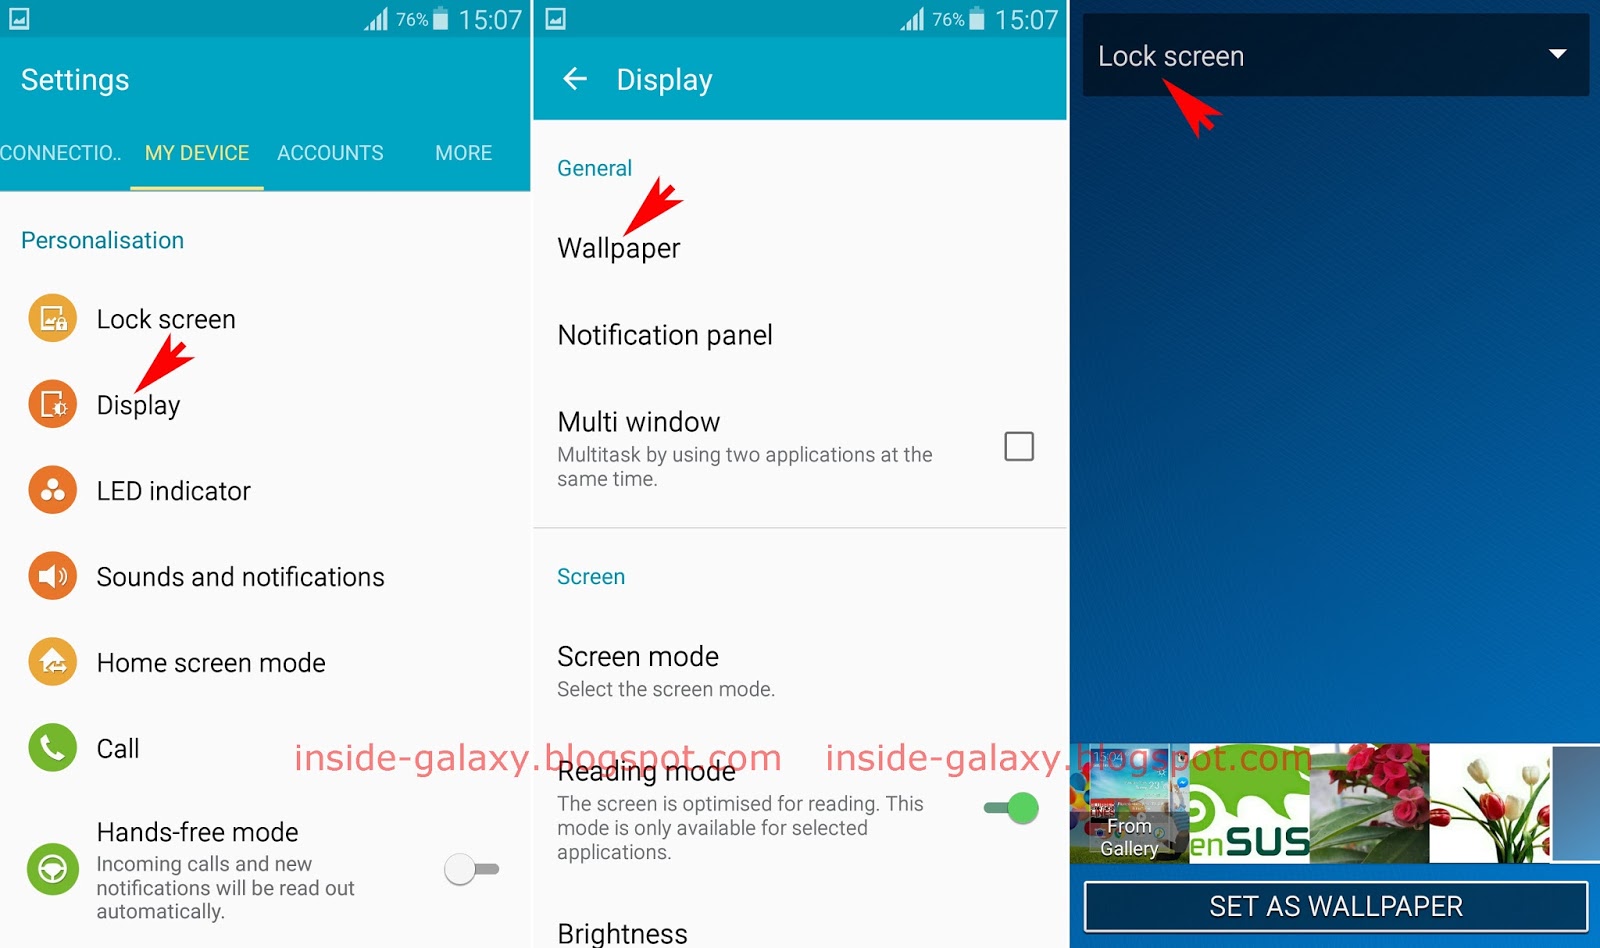 Inside Galaxy Samsung S4 How To Change Lock Screen